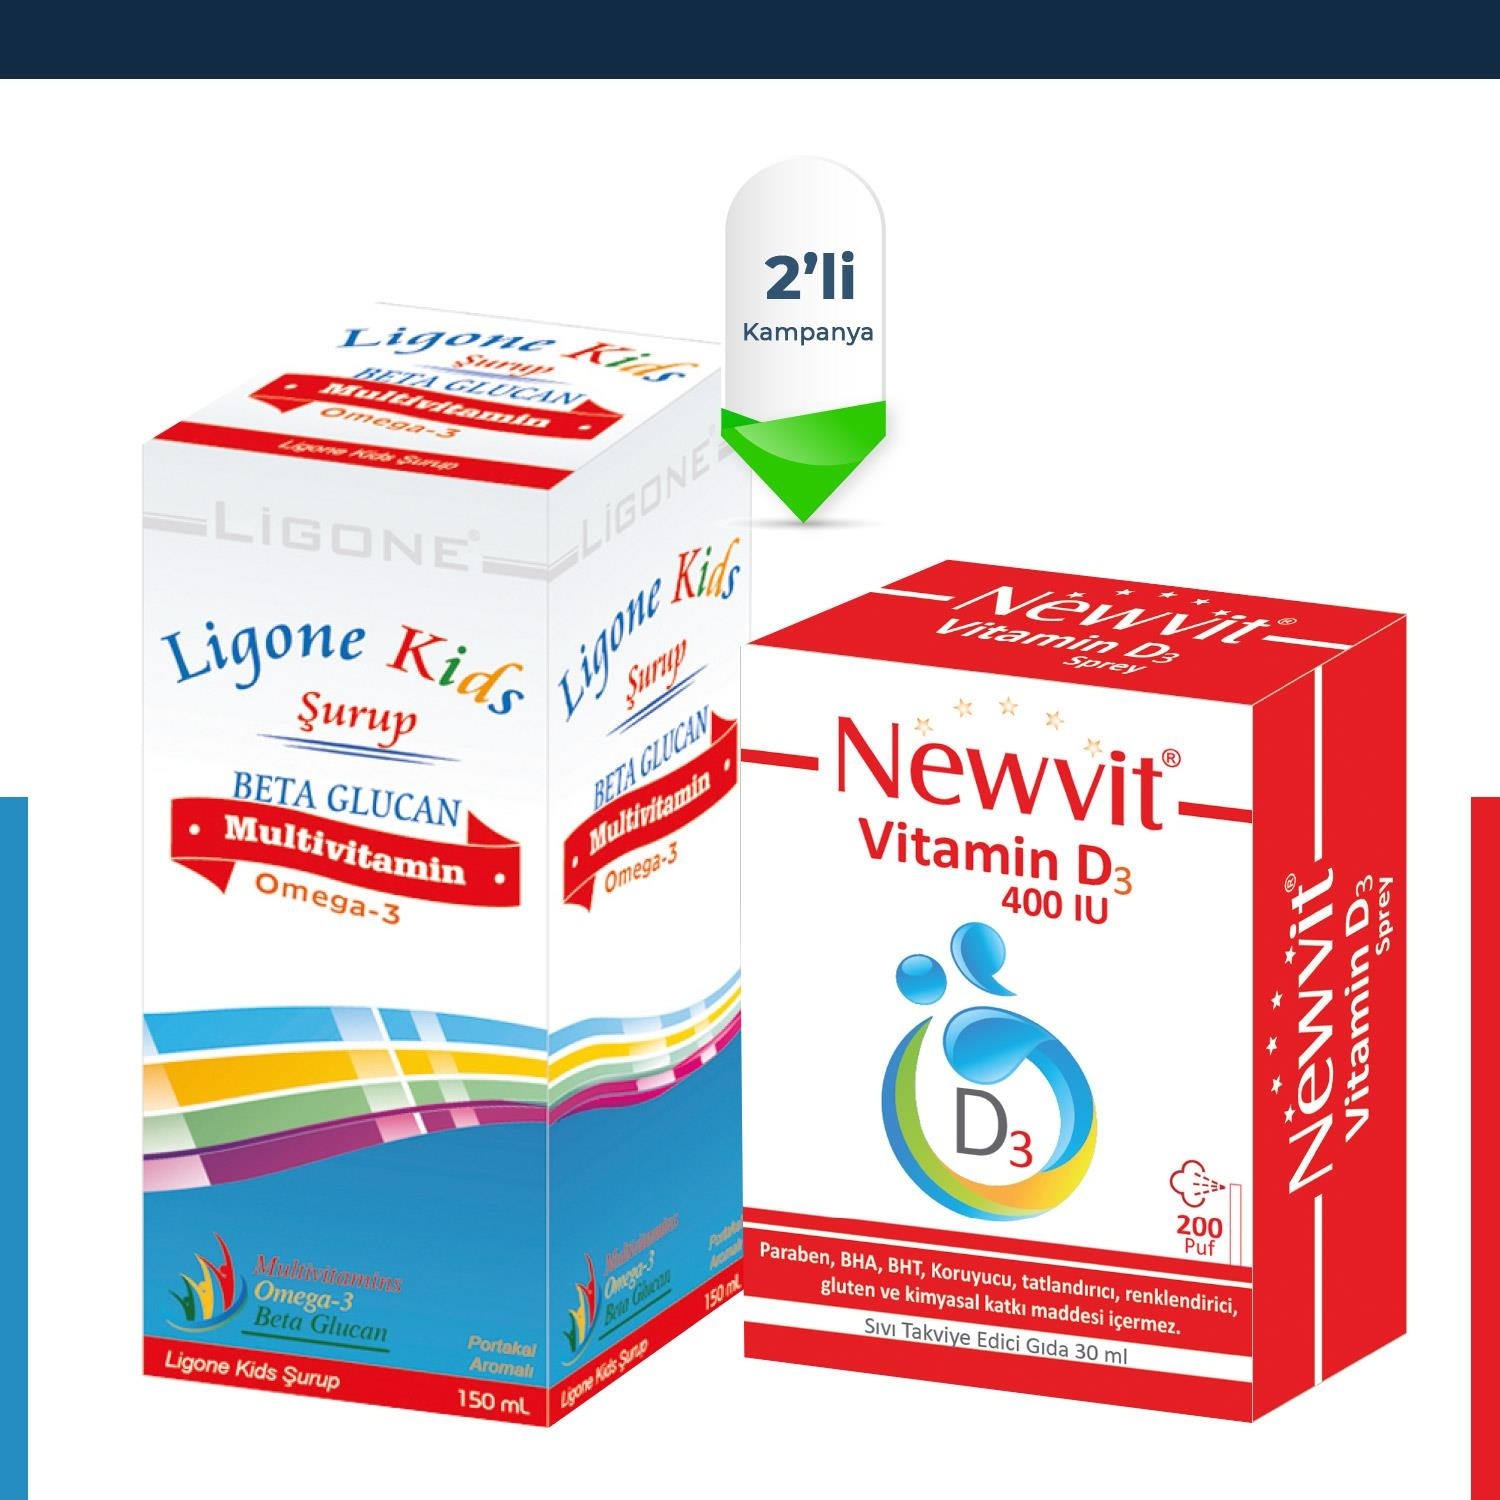 Мультивитаминный сироп Newdrog Ligone Kids 150 мл + Спрей Newvit D3 400 МЕ